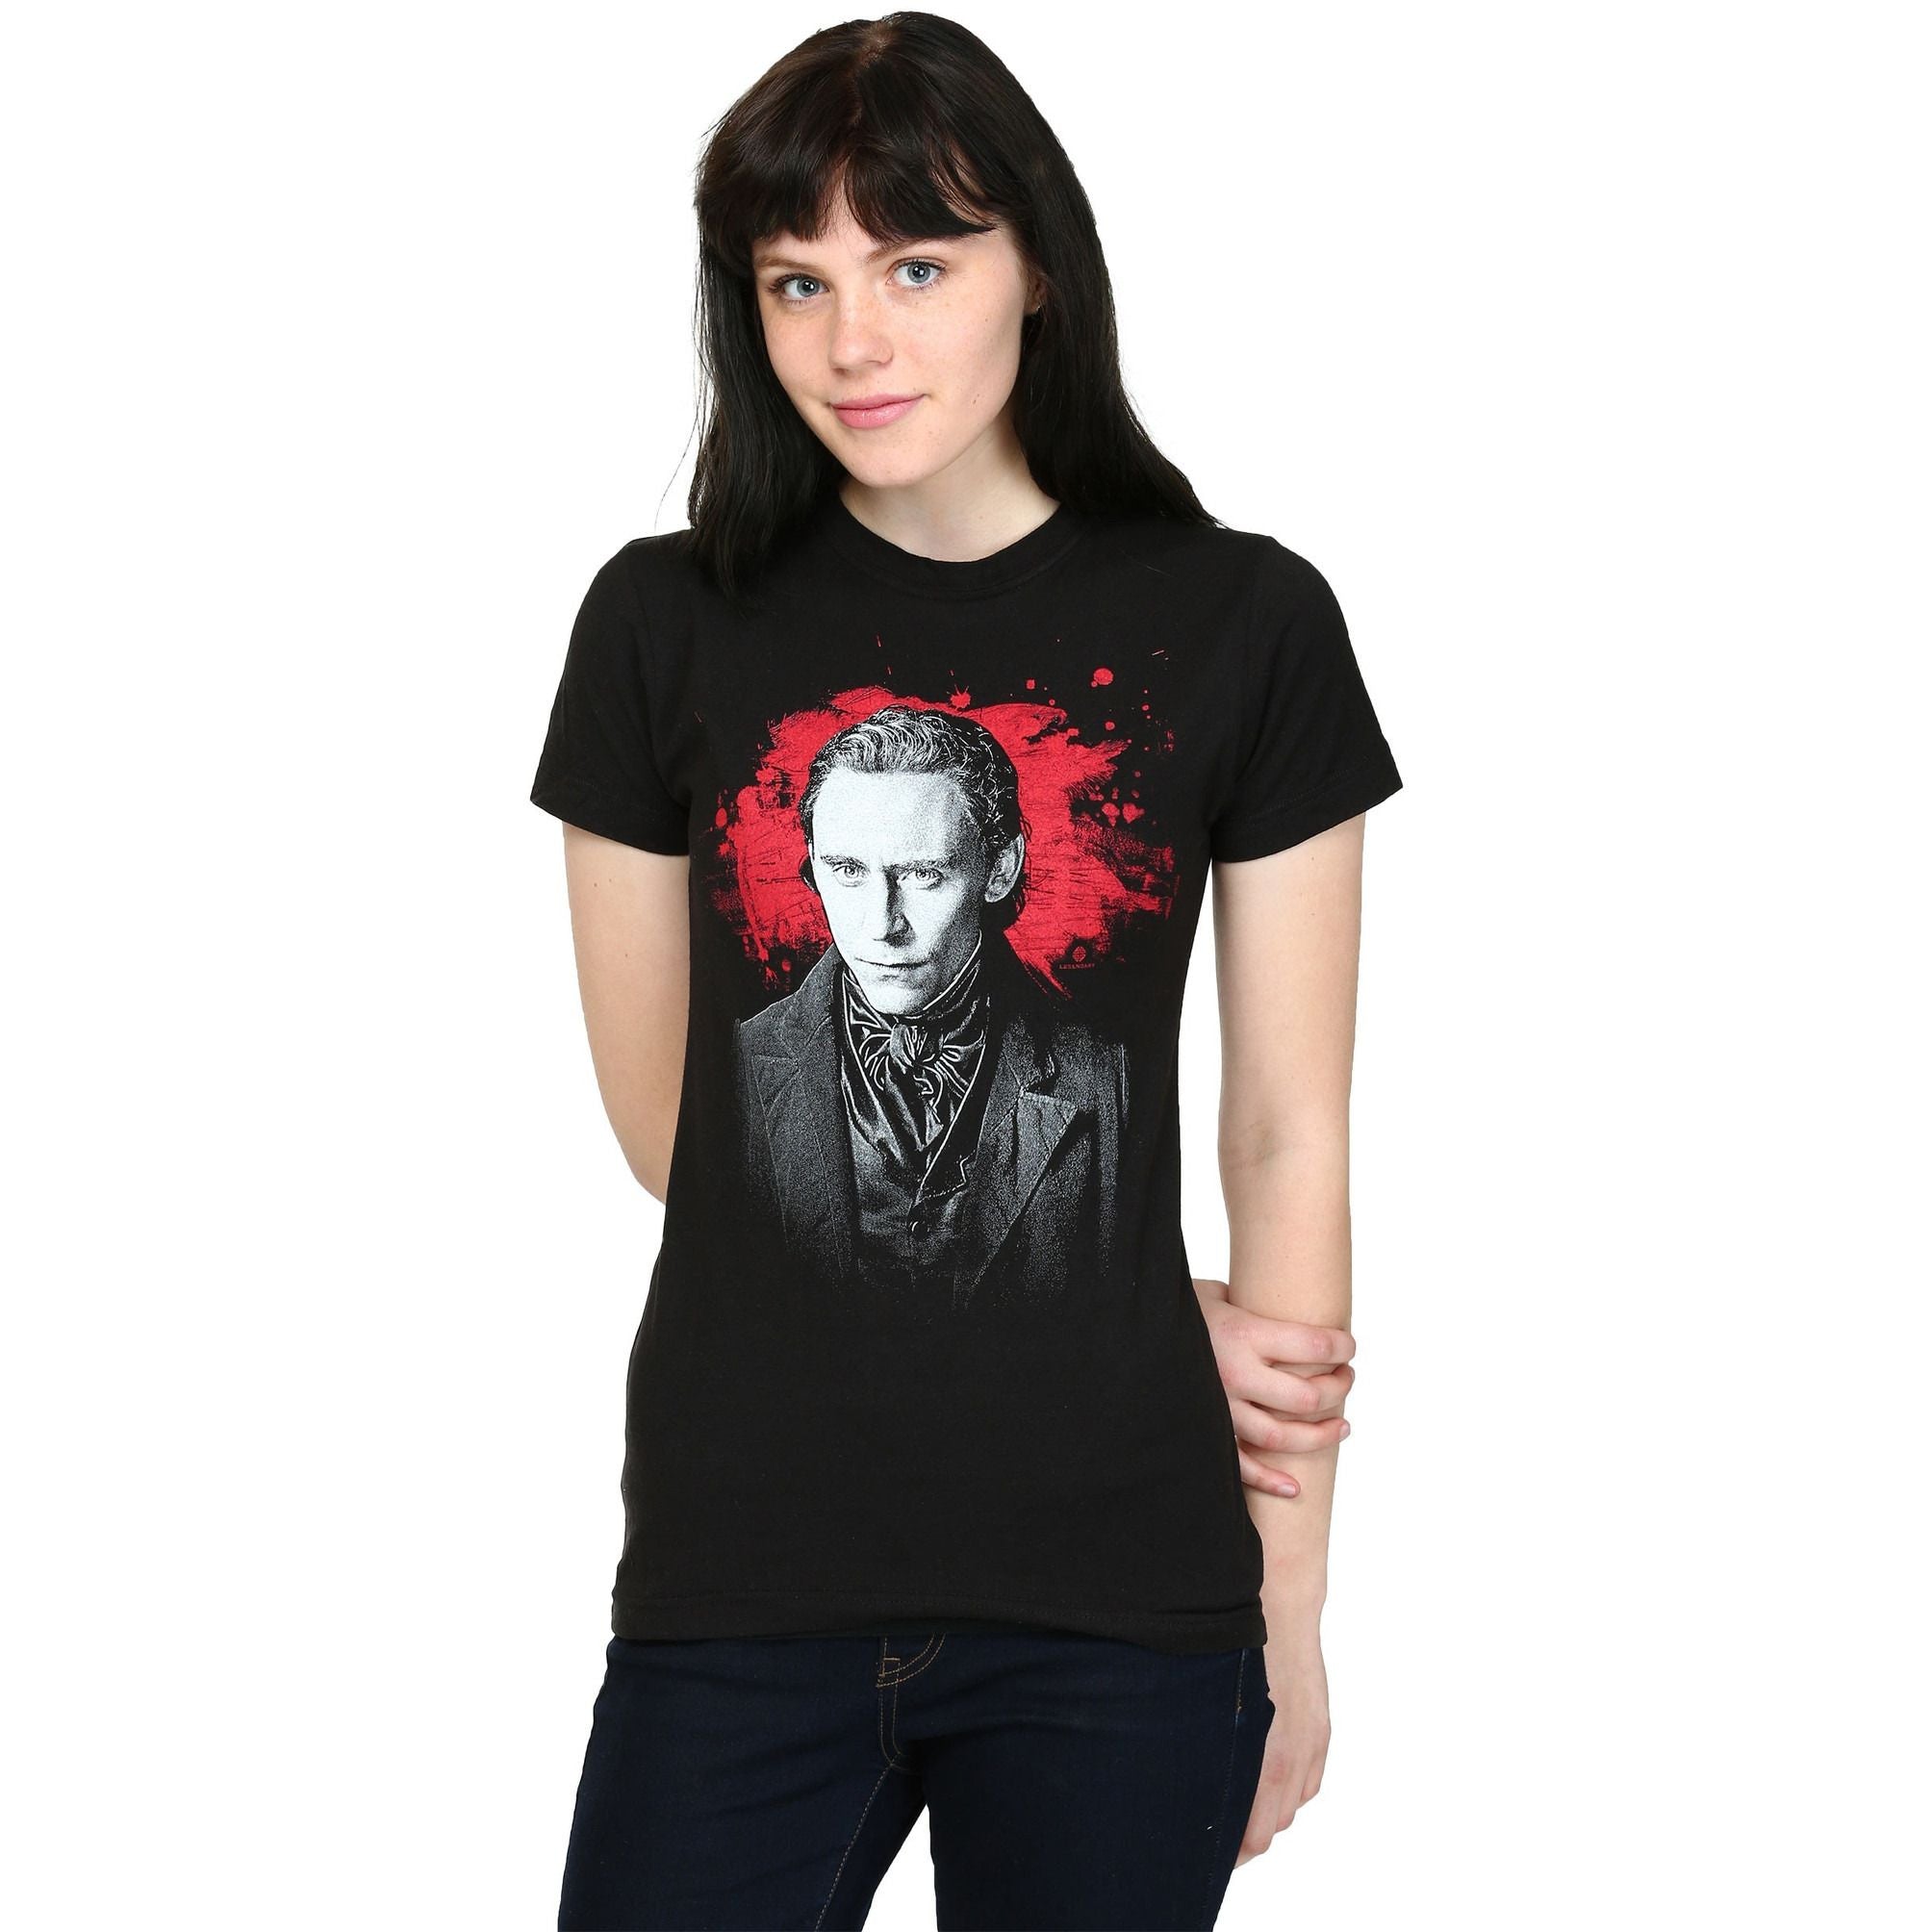  Tom Hiddleston Shirt Uncanny!